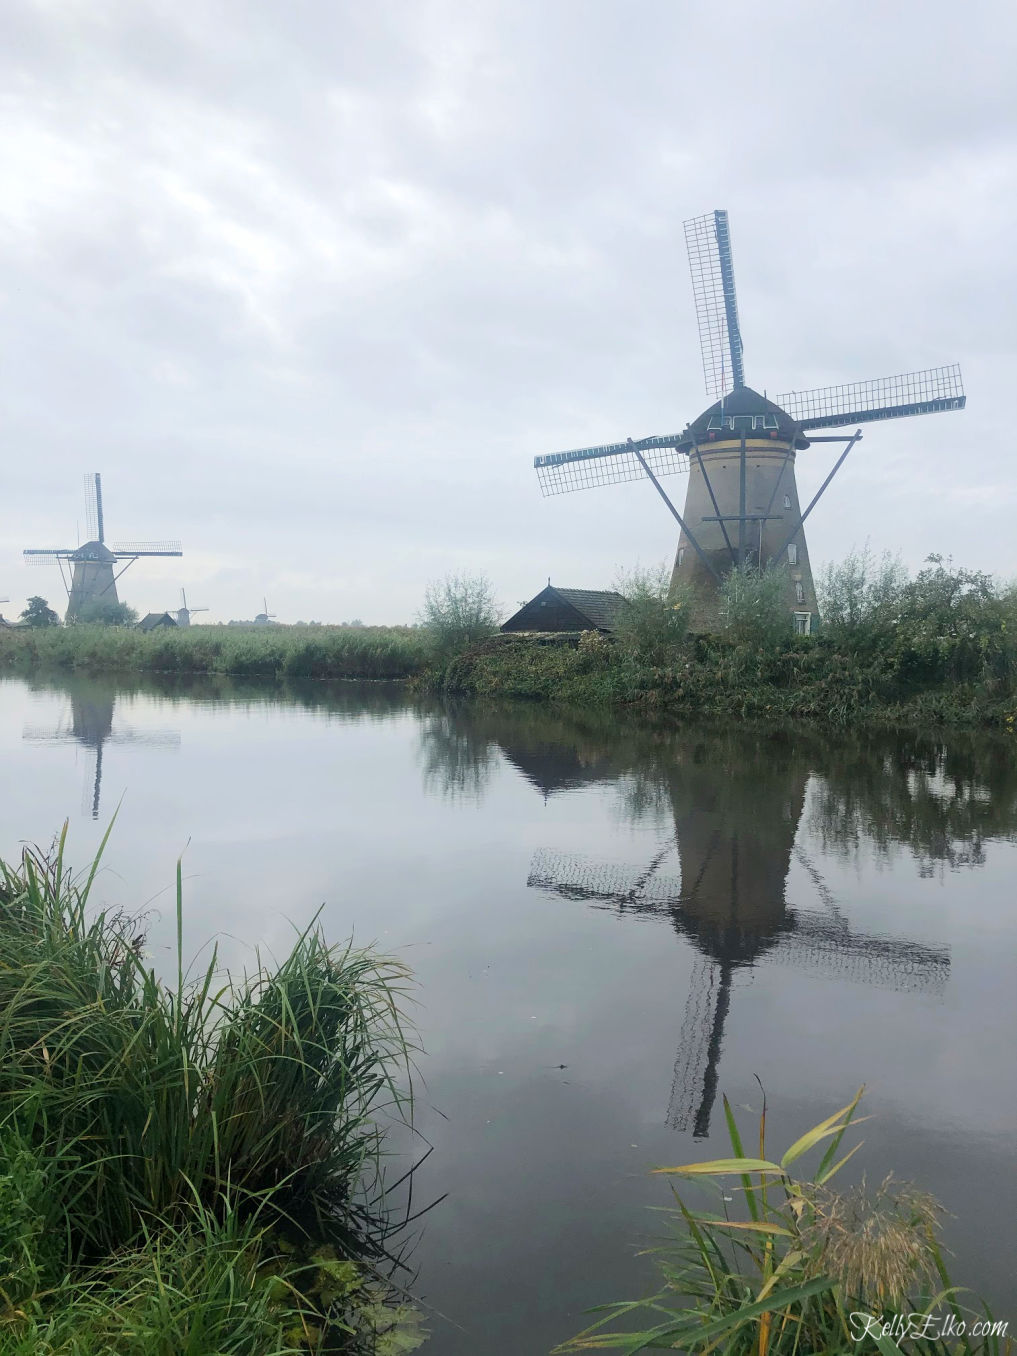 Kinderdijk Netherlands is a UNESCO World Heritage site of 19 windmills kellyelko.com #windmills #kinderdijk #netherlands #trravel #travelblogger #europetravel #rivercruise #rhineriver 